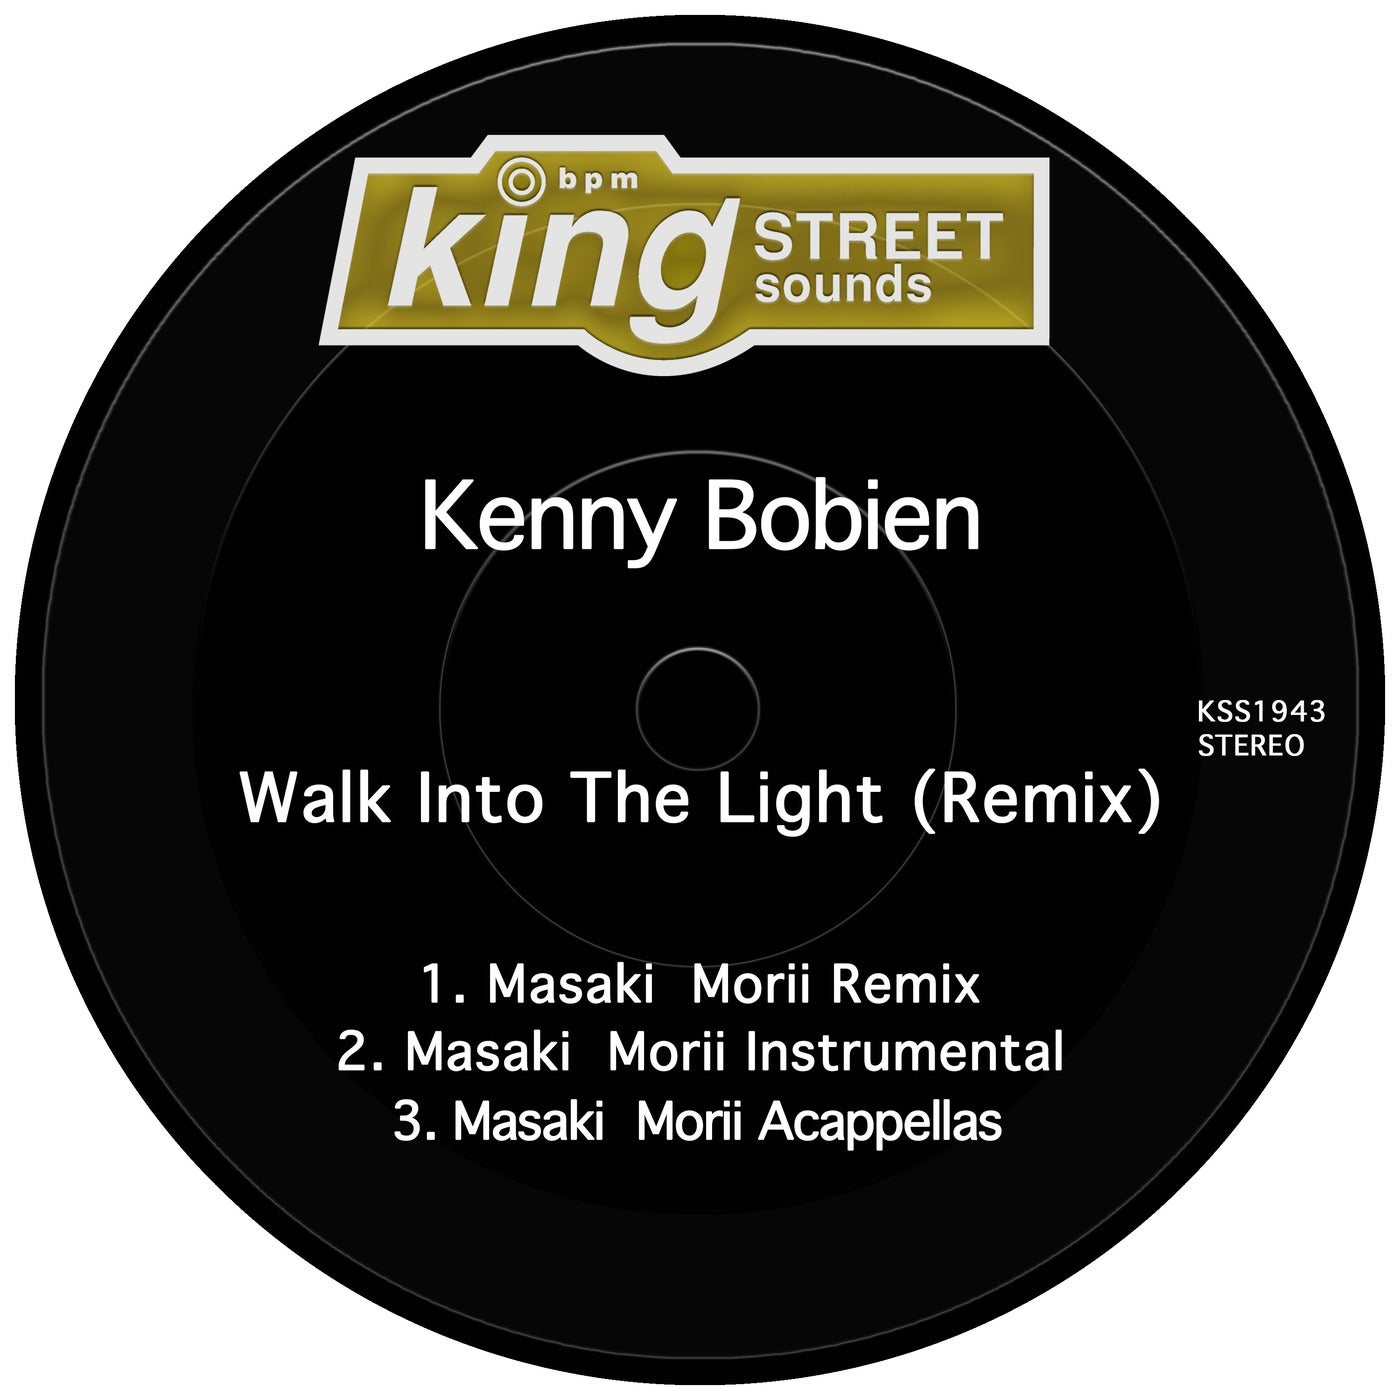 Walk Into The Light (Remix)